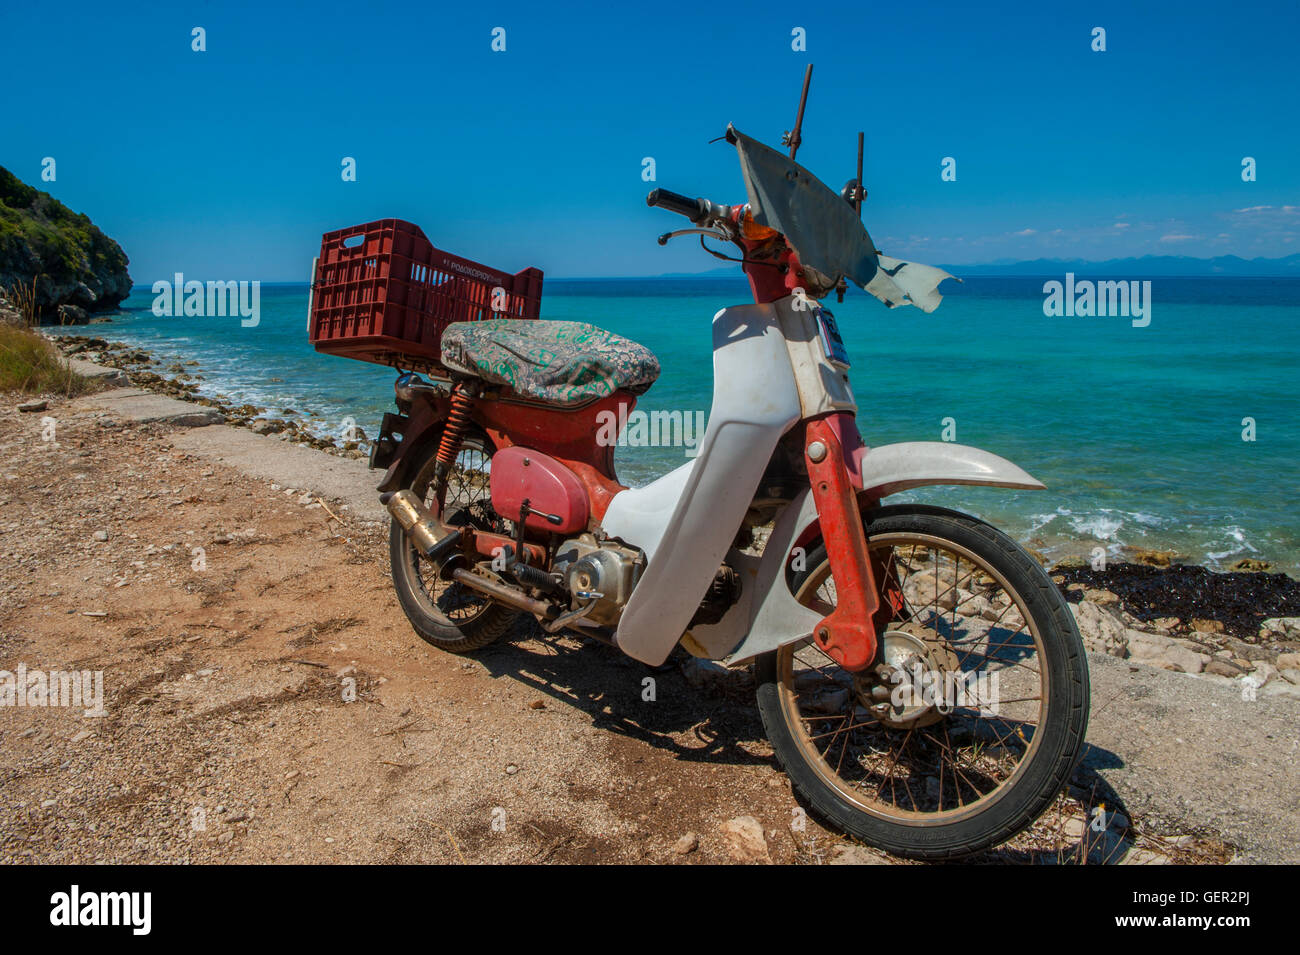 Un solitario, vecchio ciclomotore su una spiaggia deserta in Grecia Foto Stock